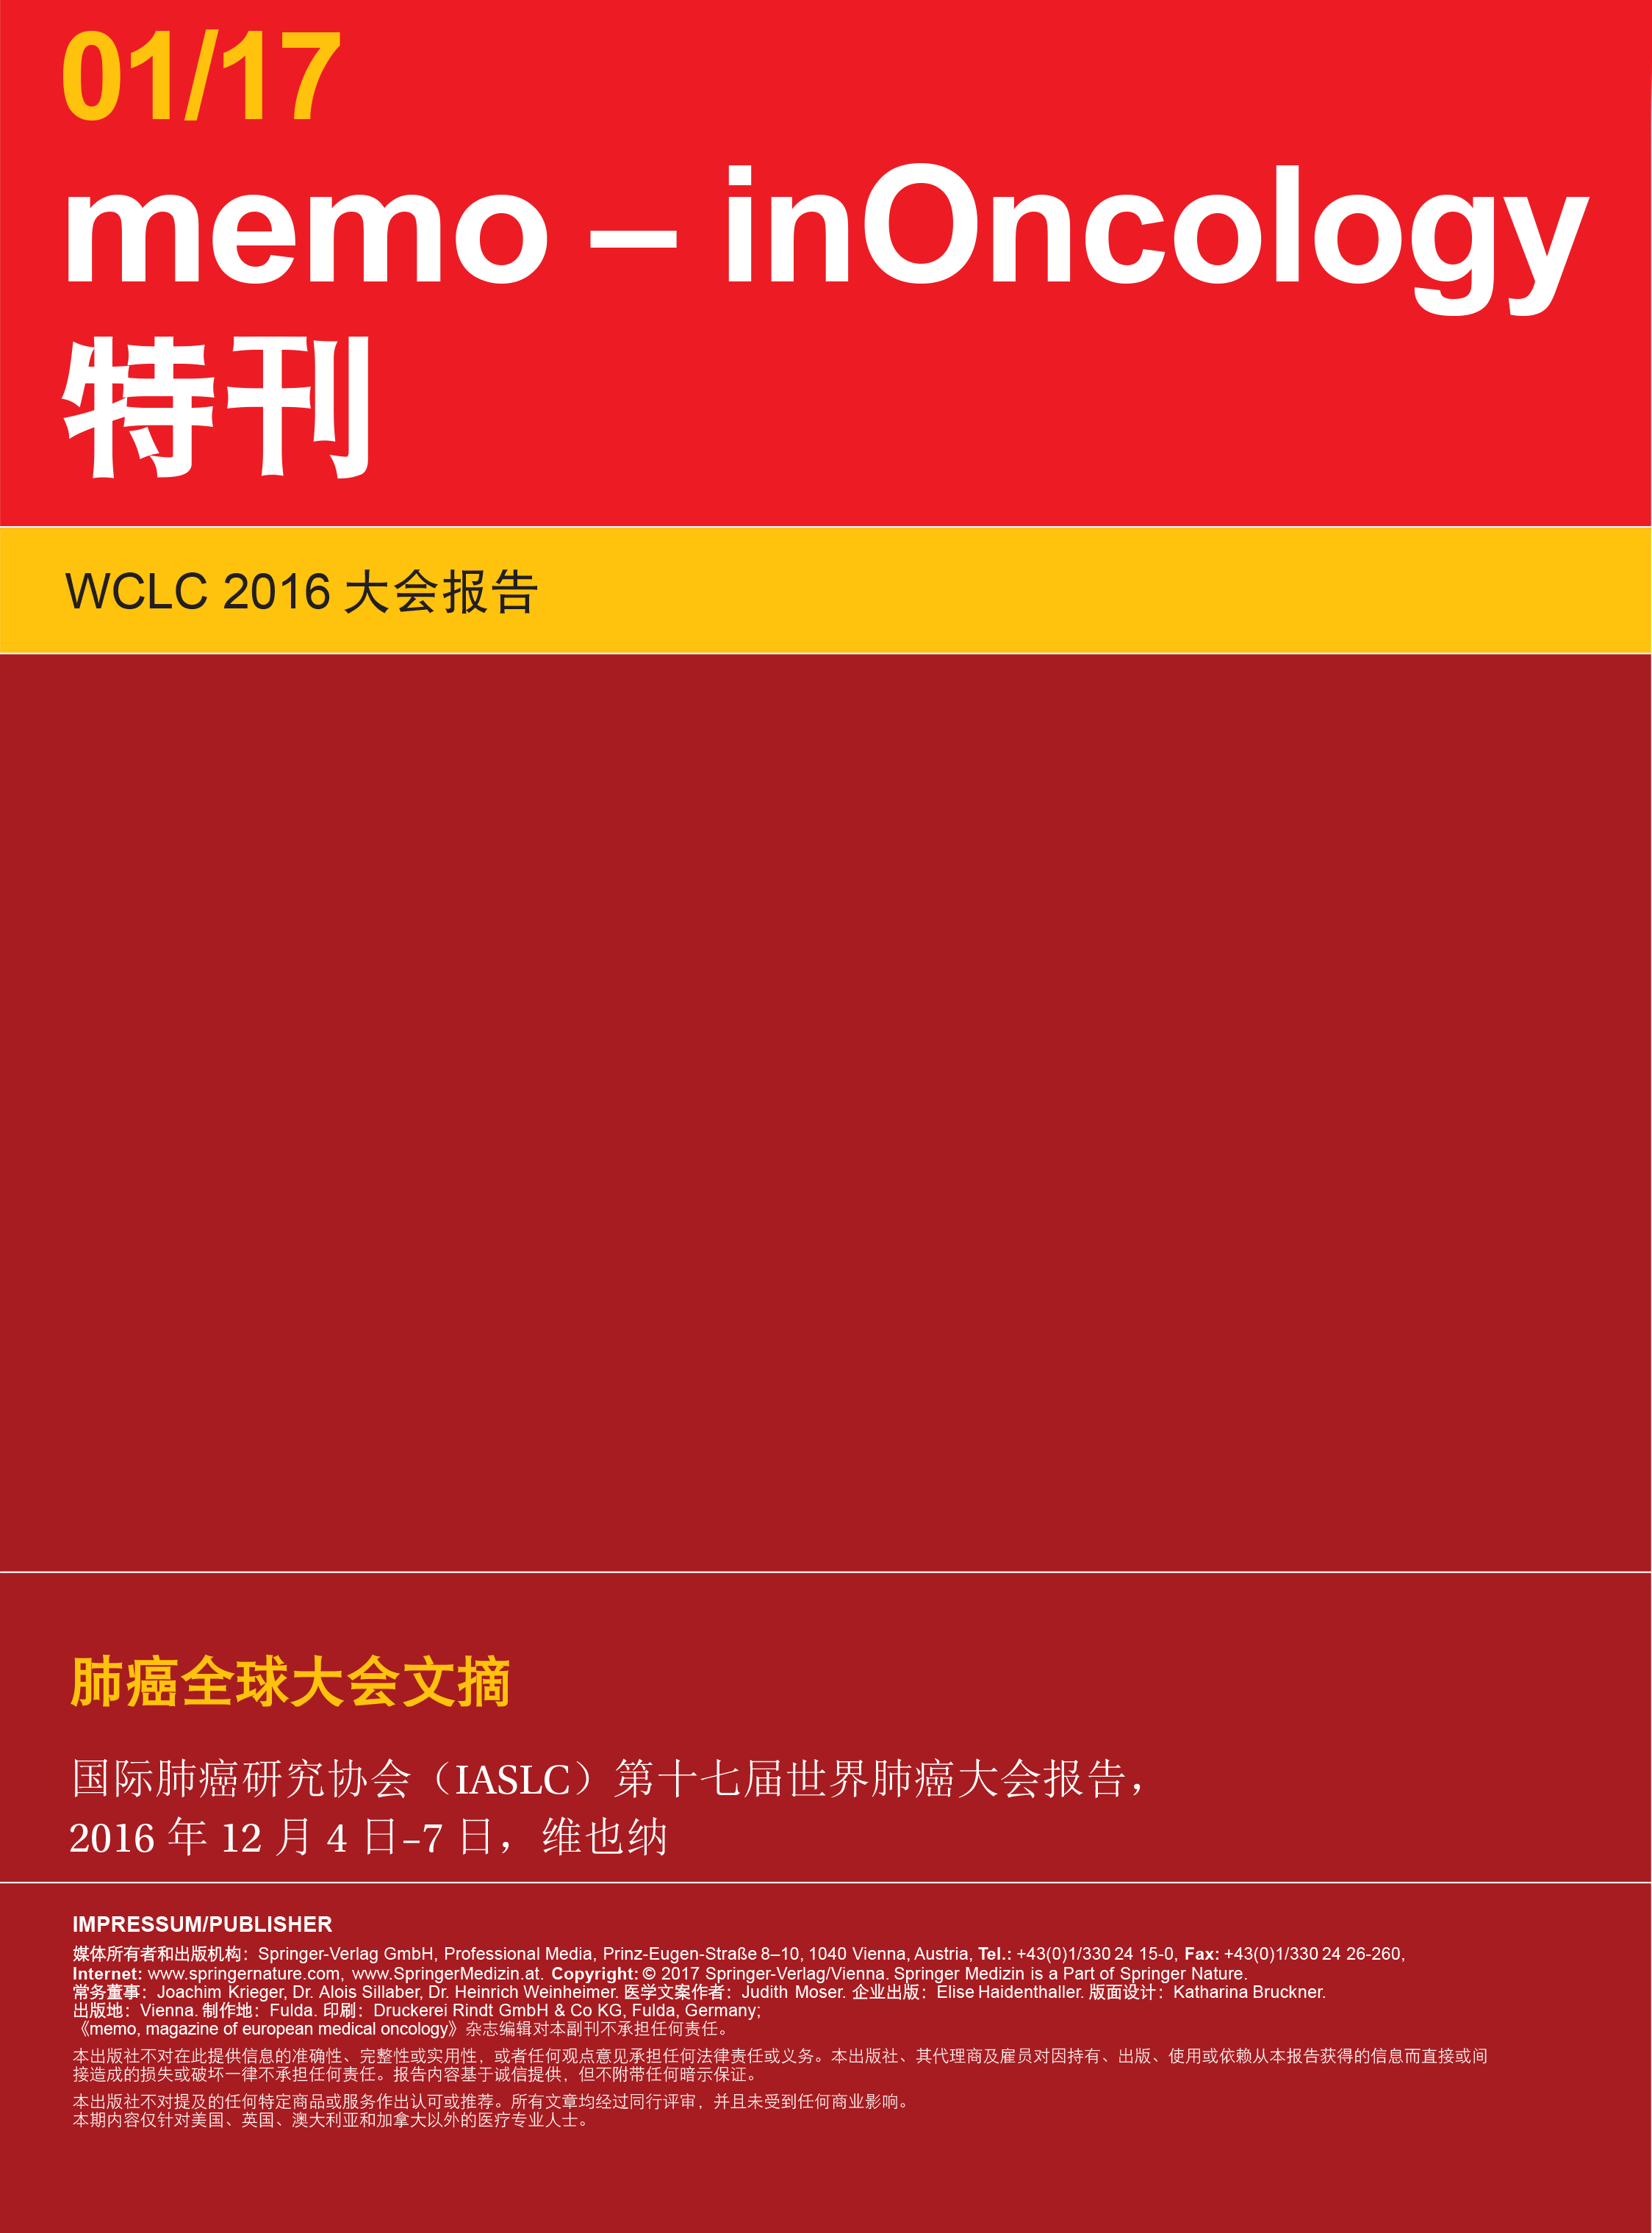 WCLC 2016 Mandarin